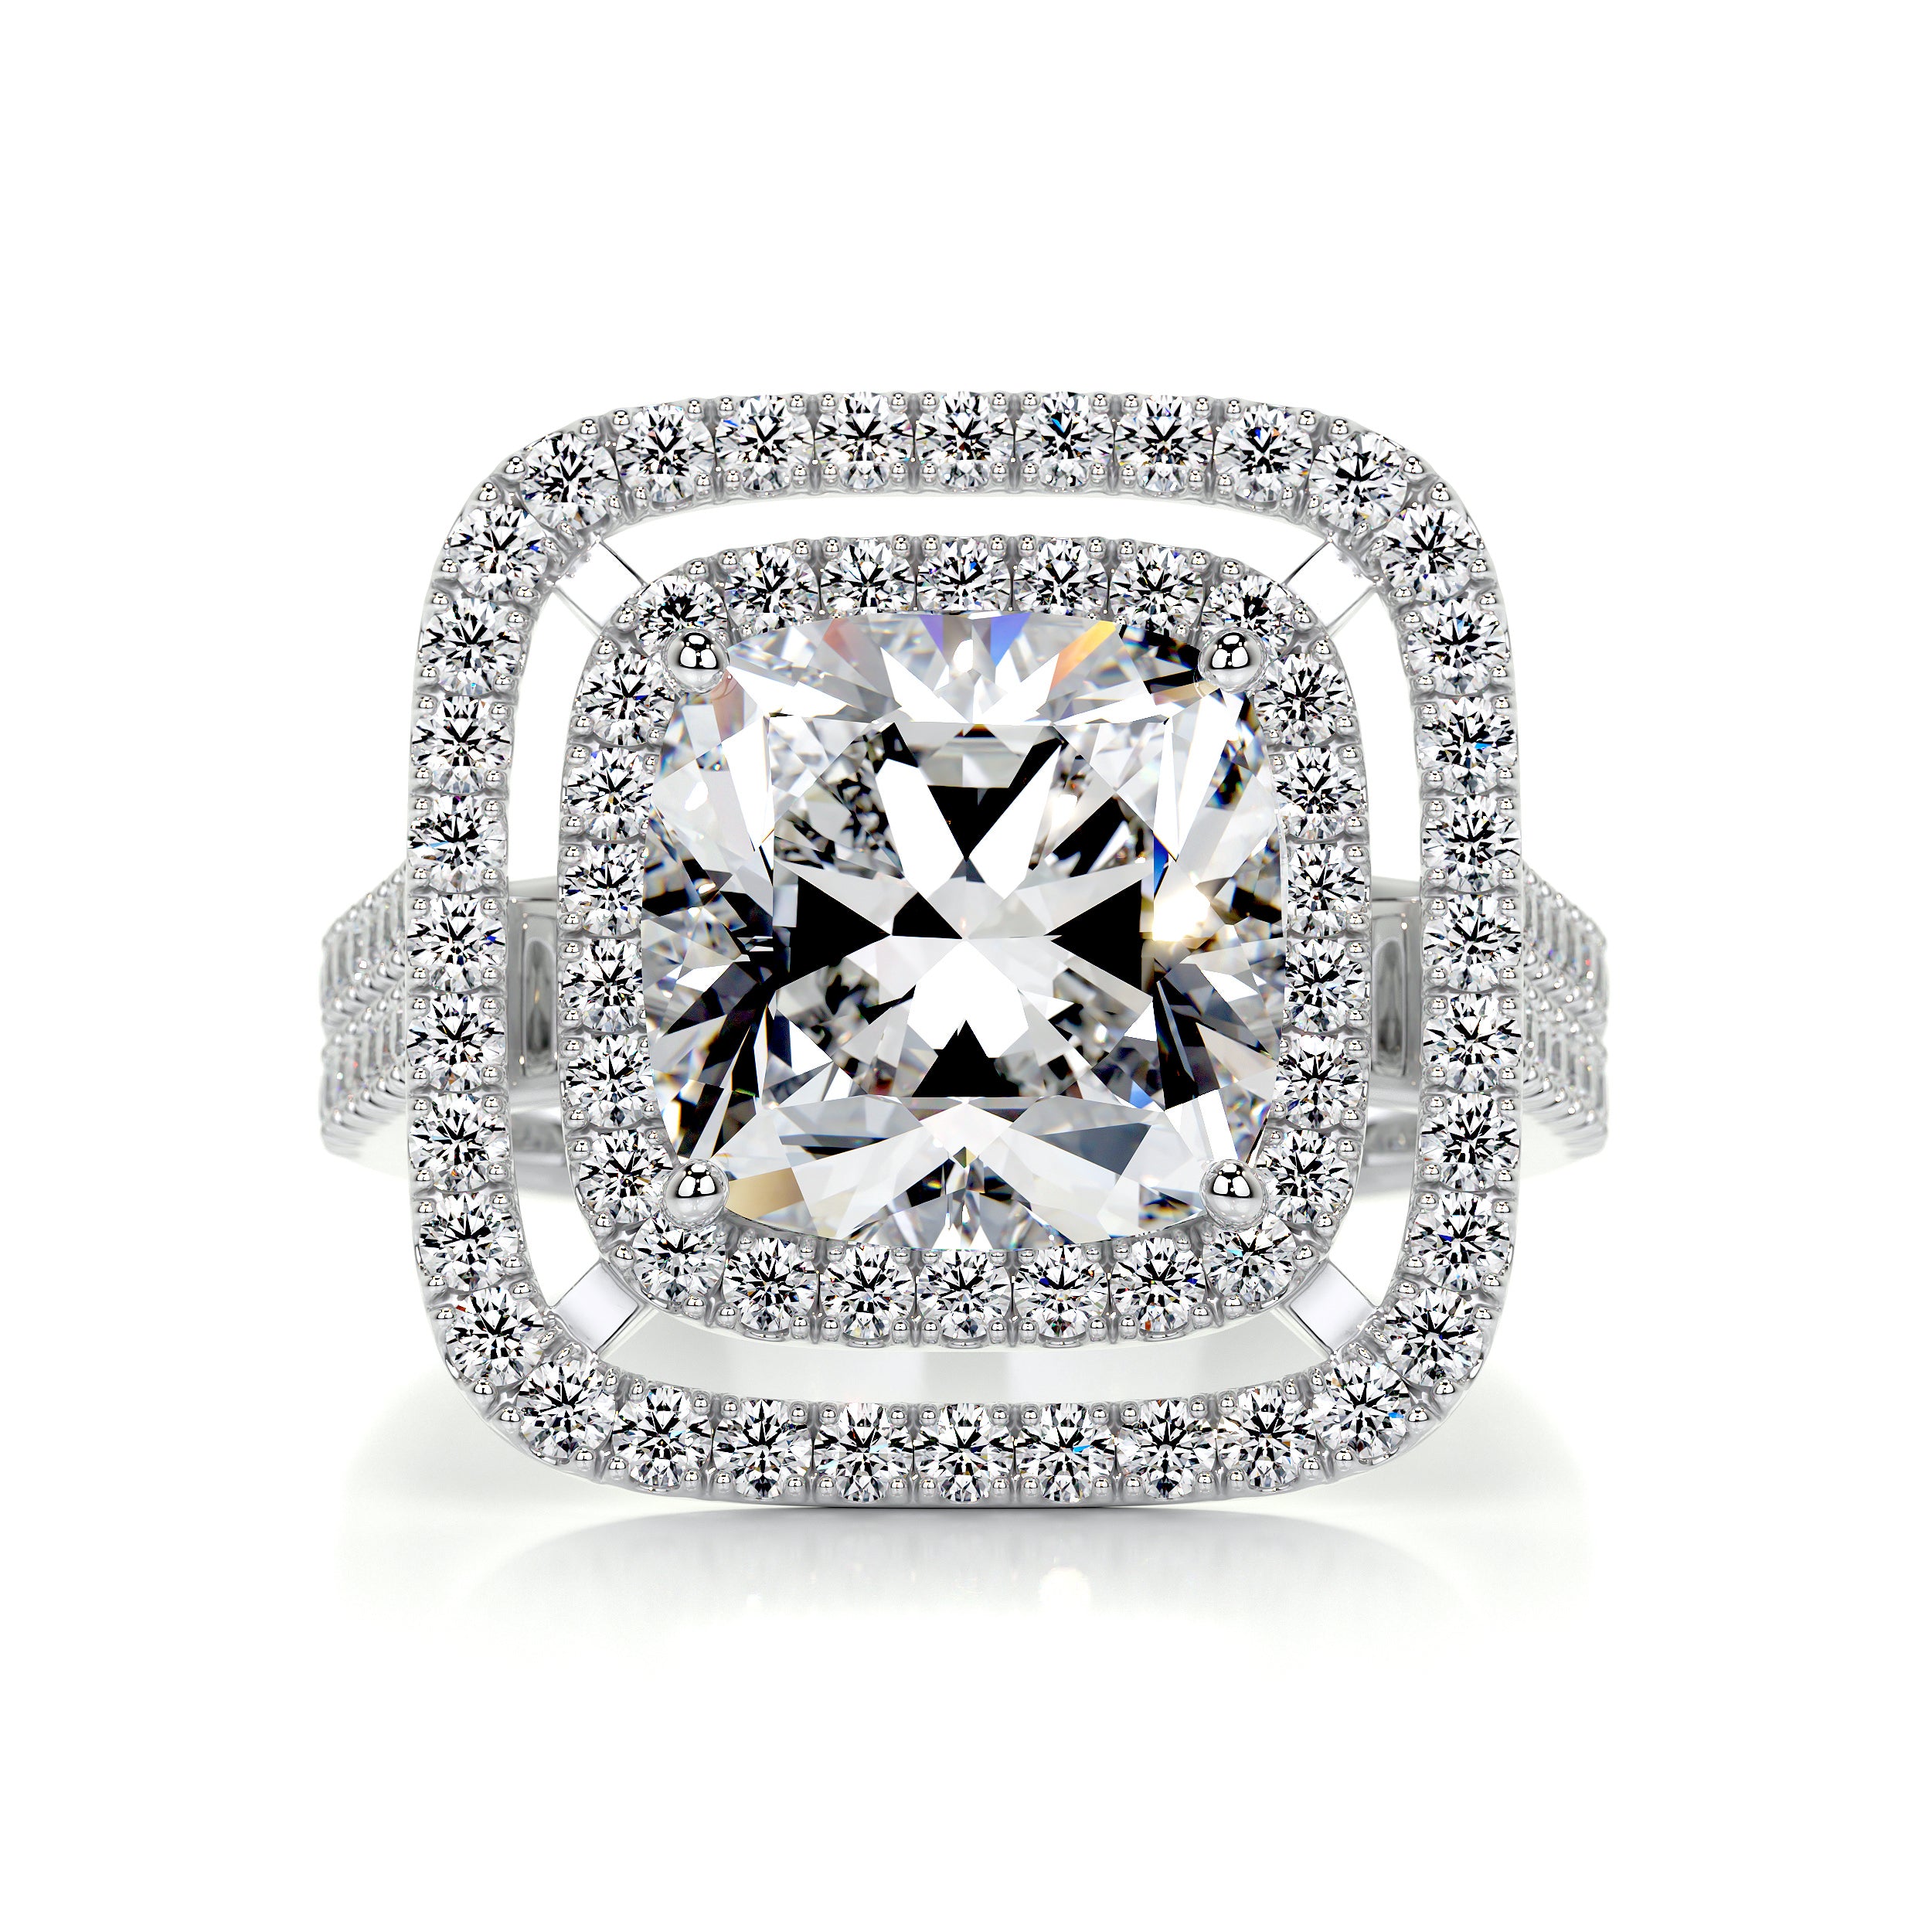 Piper Diamond Engagement Ring   (4 Carat) - 18K White Gold